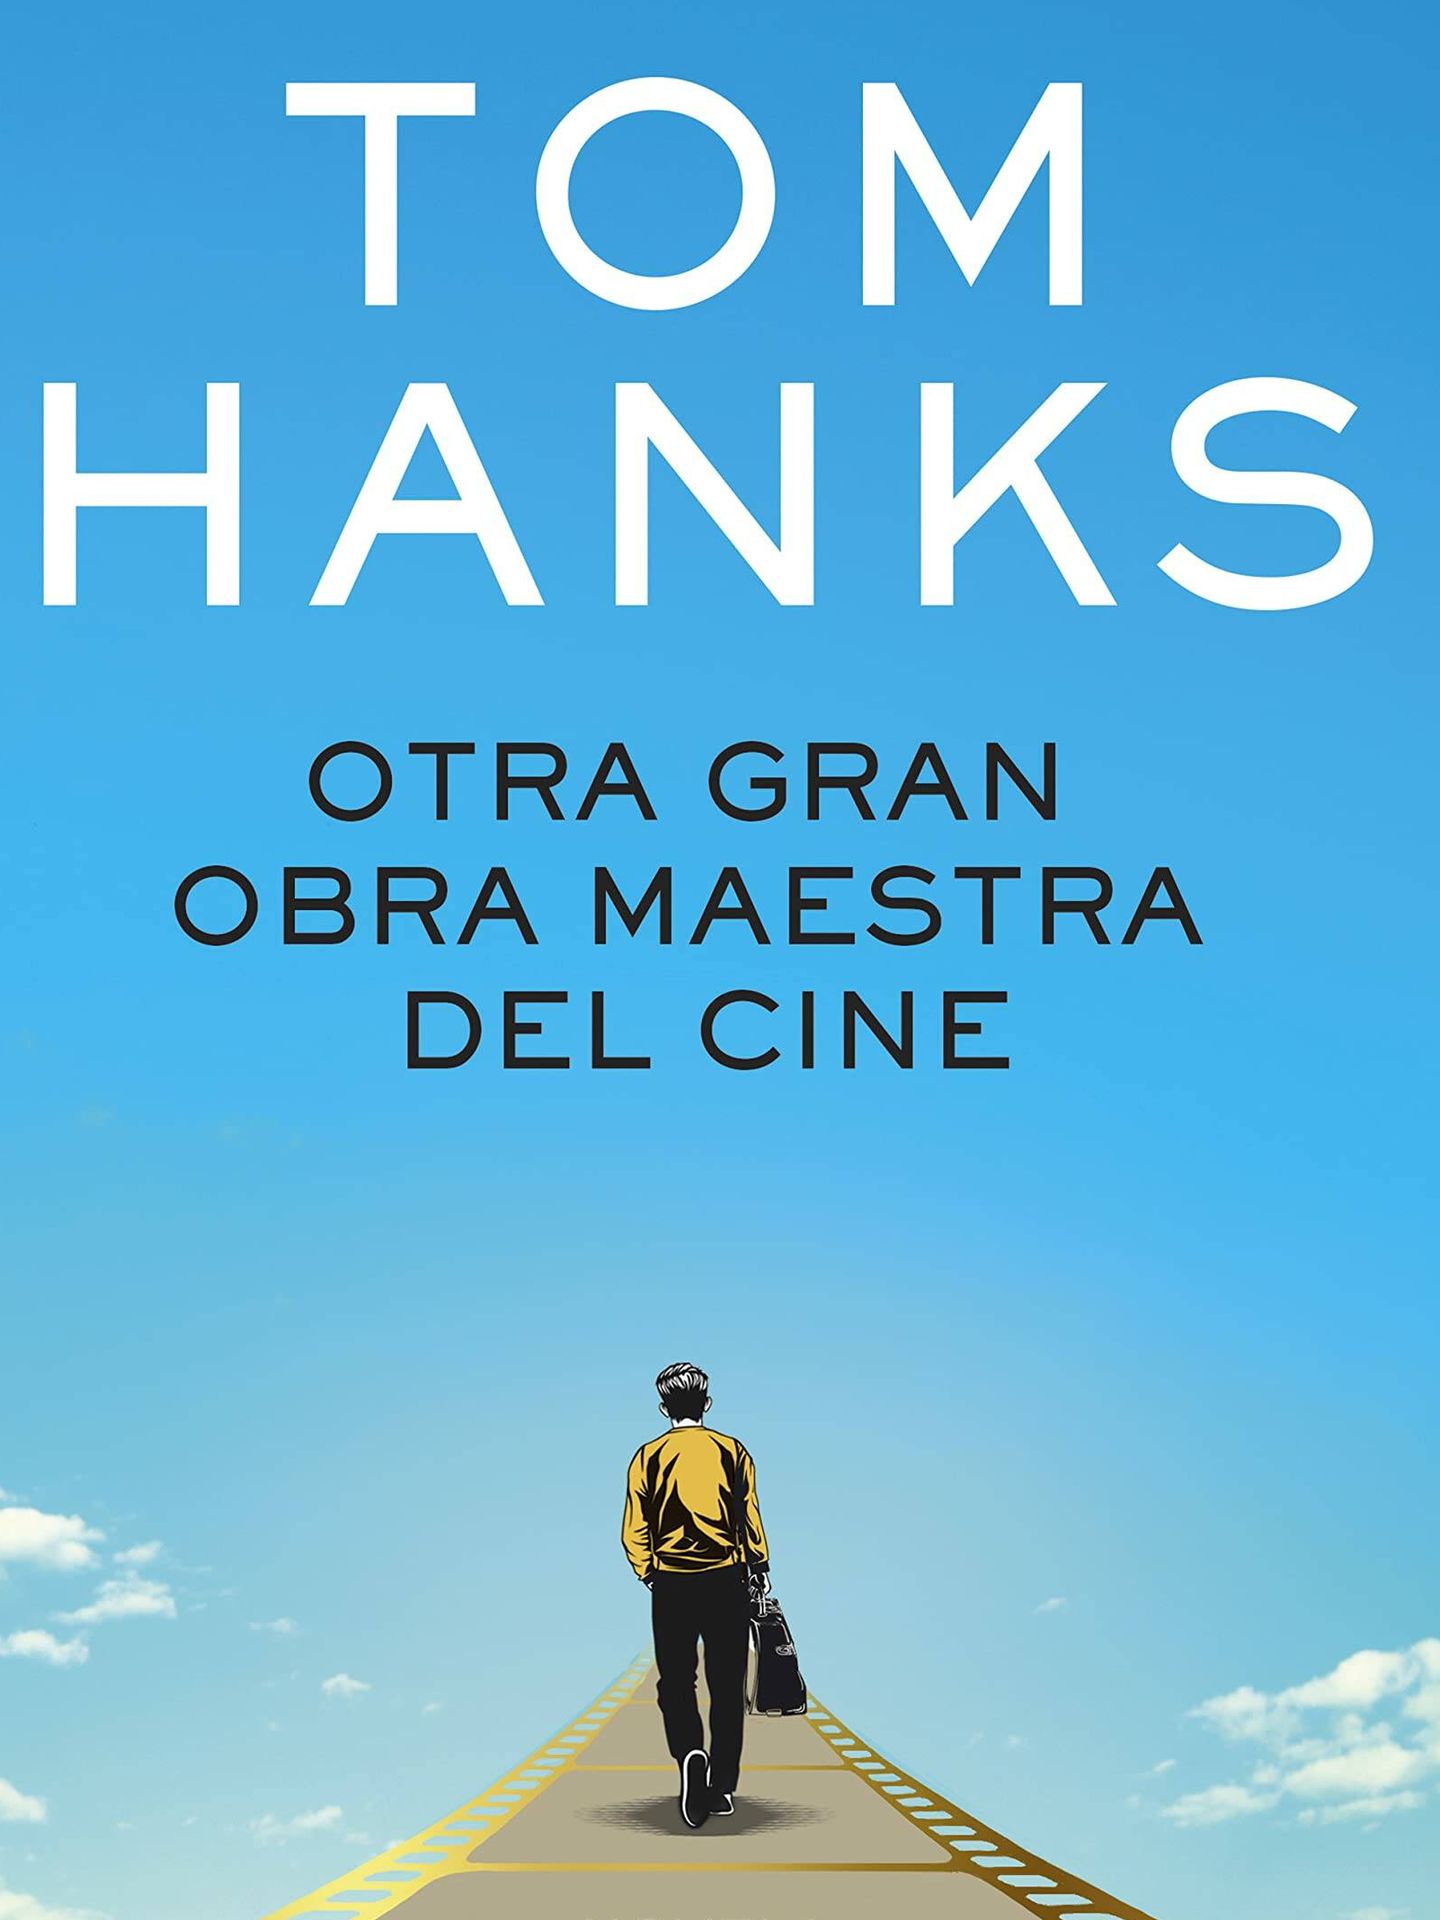 Portada de 'Otra gran obra maestra del cine', la nueva novela de Tom Hanks.